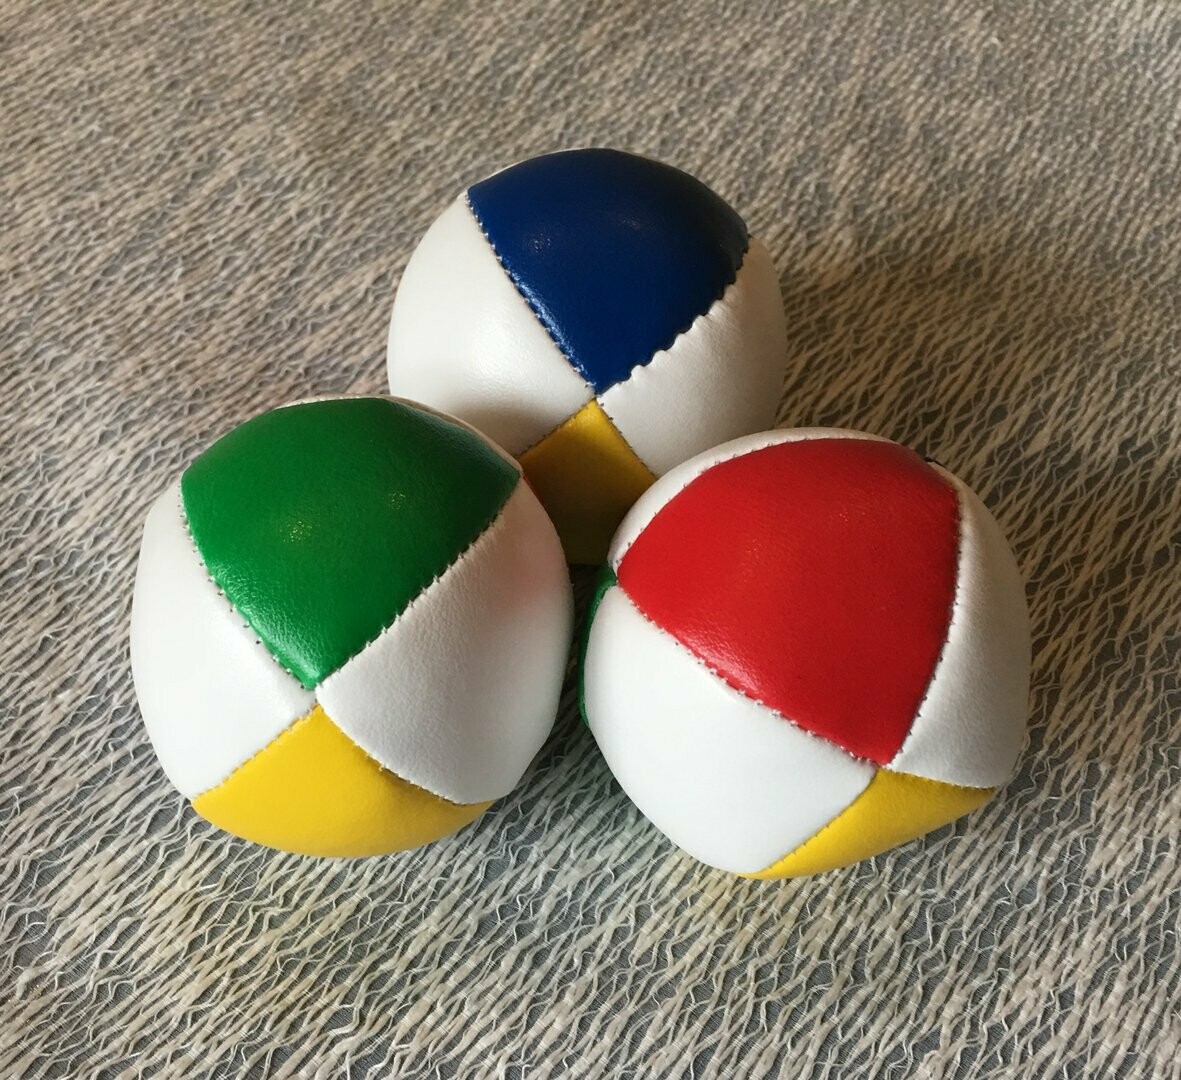 REHORULI®-Jonglierball M++ - Größe M (90g) - 8-Panel (Dreieck)en